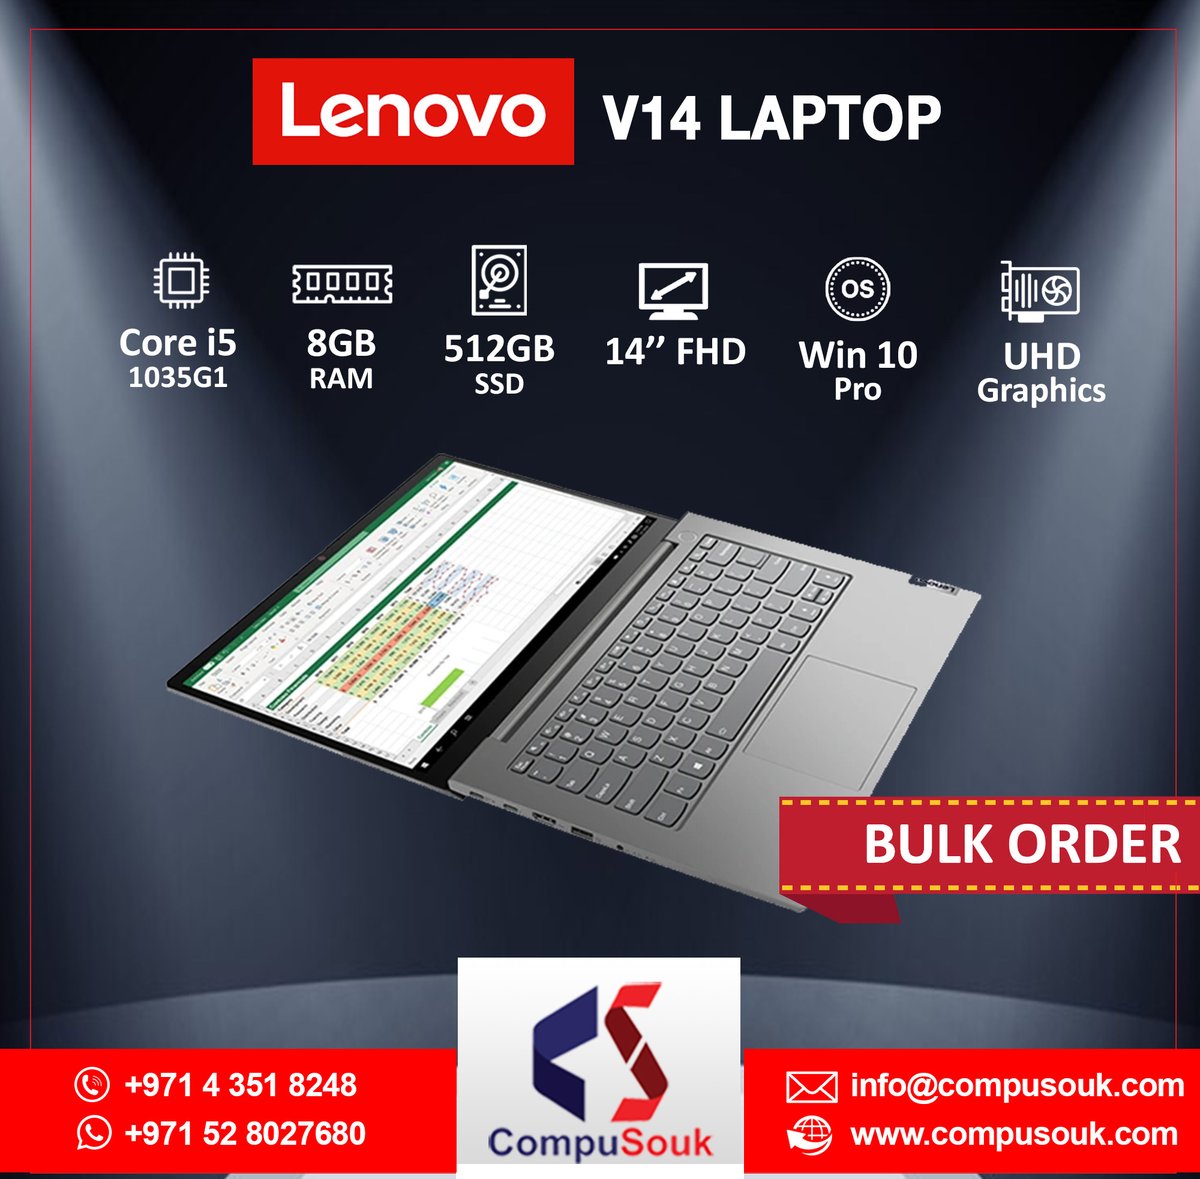 High Selling Laptop
#Lenovo V14 #Laptop - Core i5 | 8GB | 512GBSSD | Win 10 Pro
Visit for more Deals compusouk.com/daily-deals/

#Compusouk #LenovoLaptop #LenovoV14 #ComputerHardwaresales #Laptopdealers #WholesaleTechnology #HardwareWholesale #Laptopsupply #ITSupplies